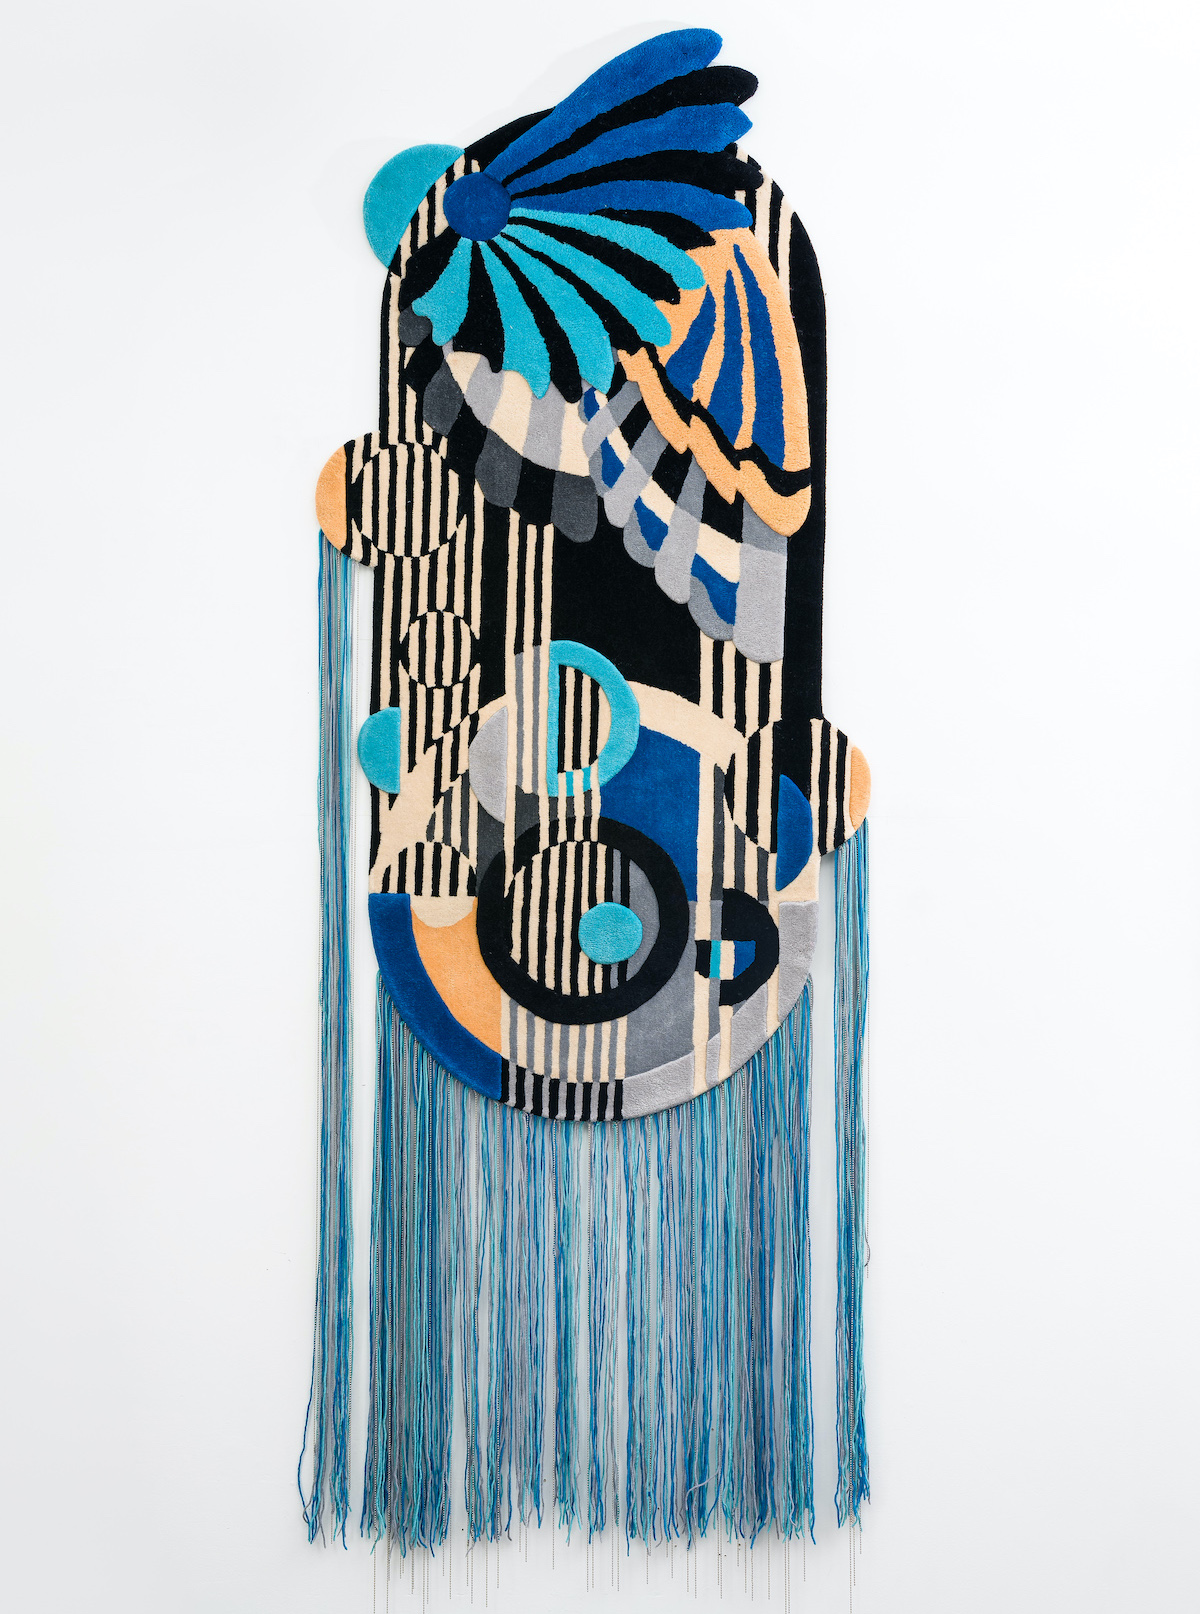 Zebra & Ostrich by Dutch fiber artist Tjitske Storm, presented by Todd Merrill Gallery at Design Miami 2023